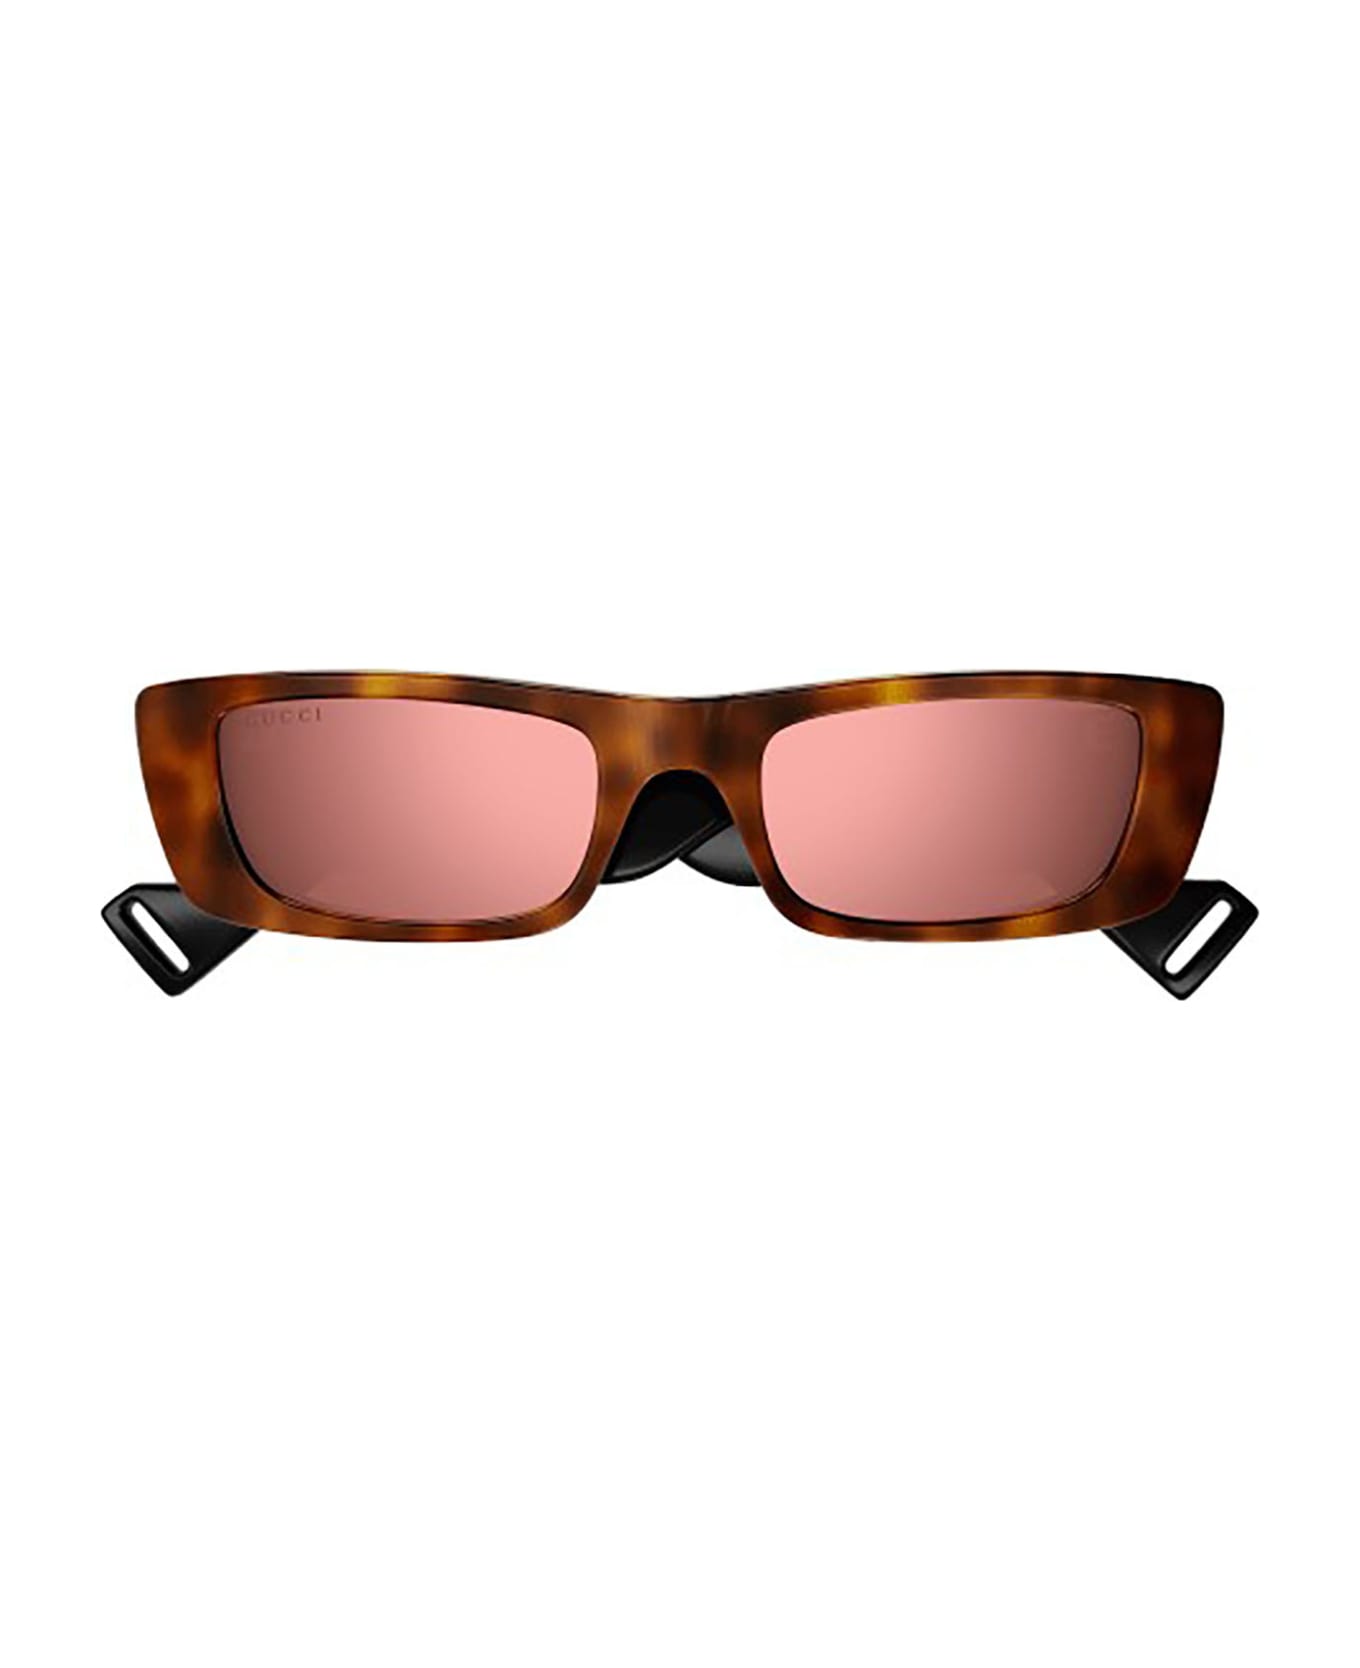 Gucci Eyewear Gg0516s Sunglasses - 015 havana havana red